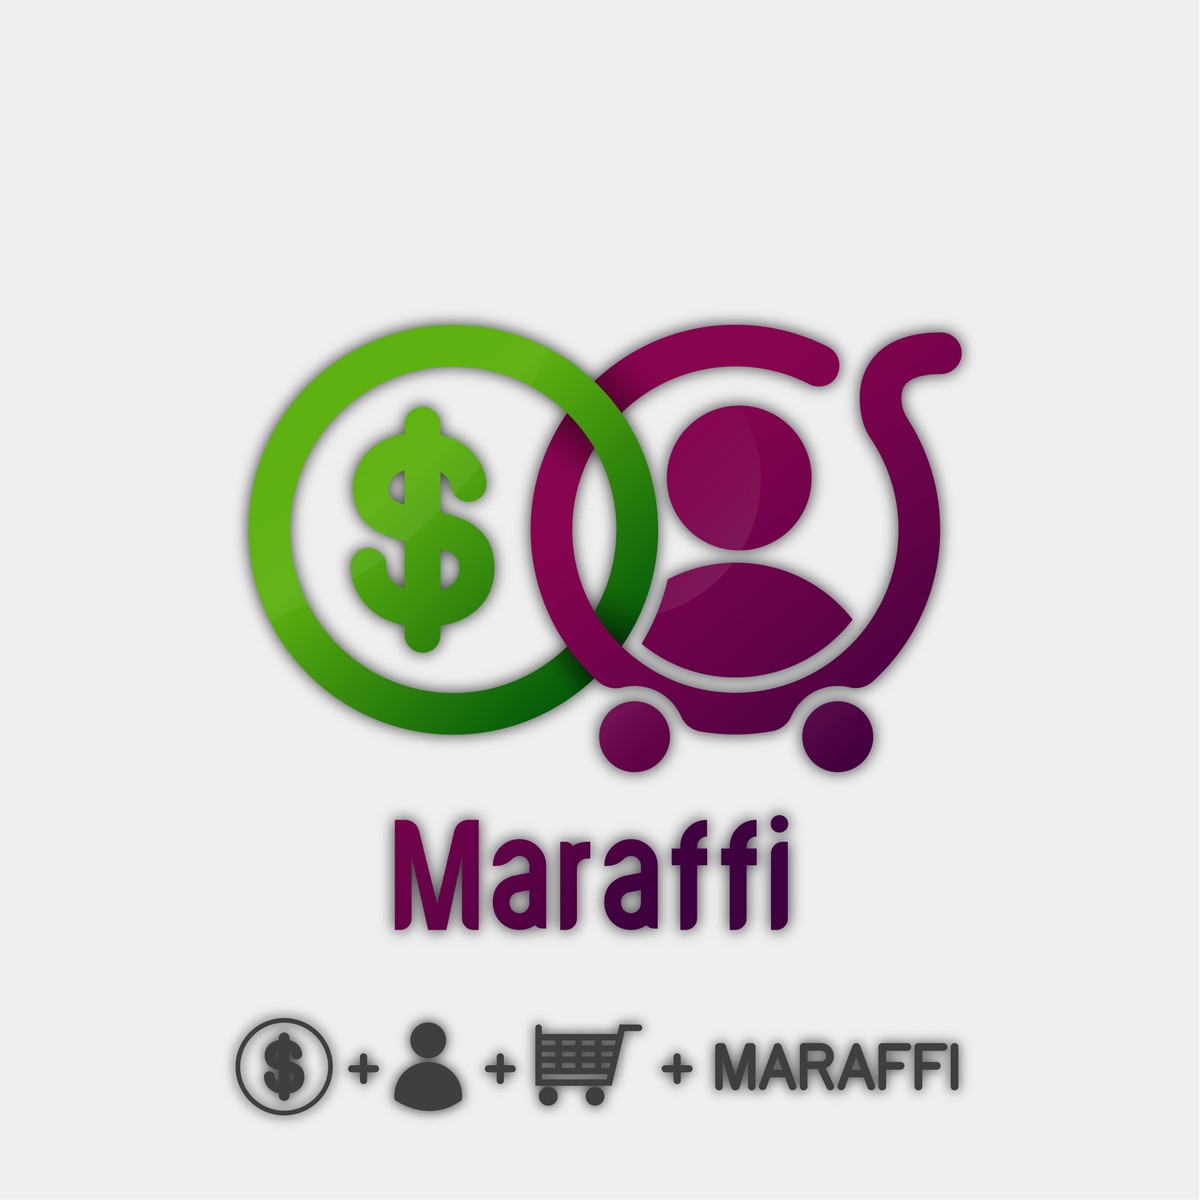 maraffi_logo_details